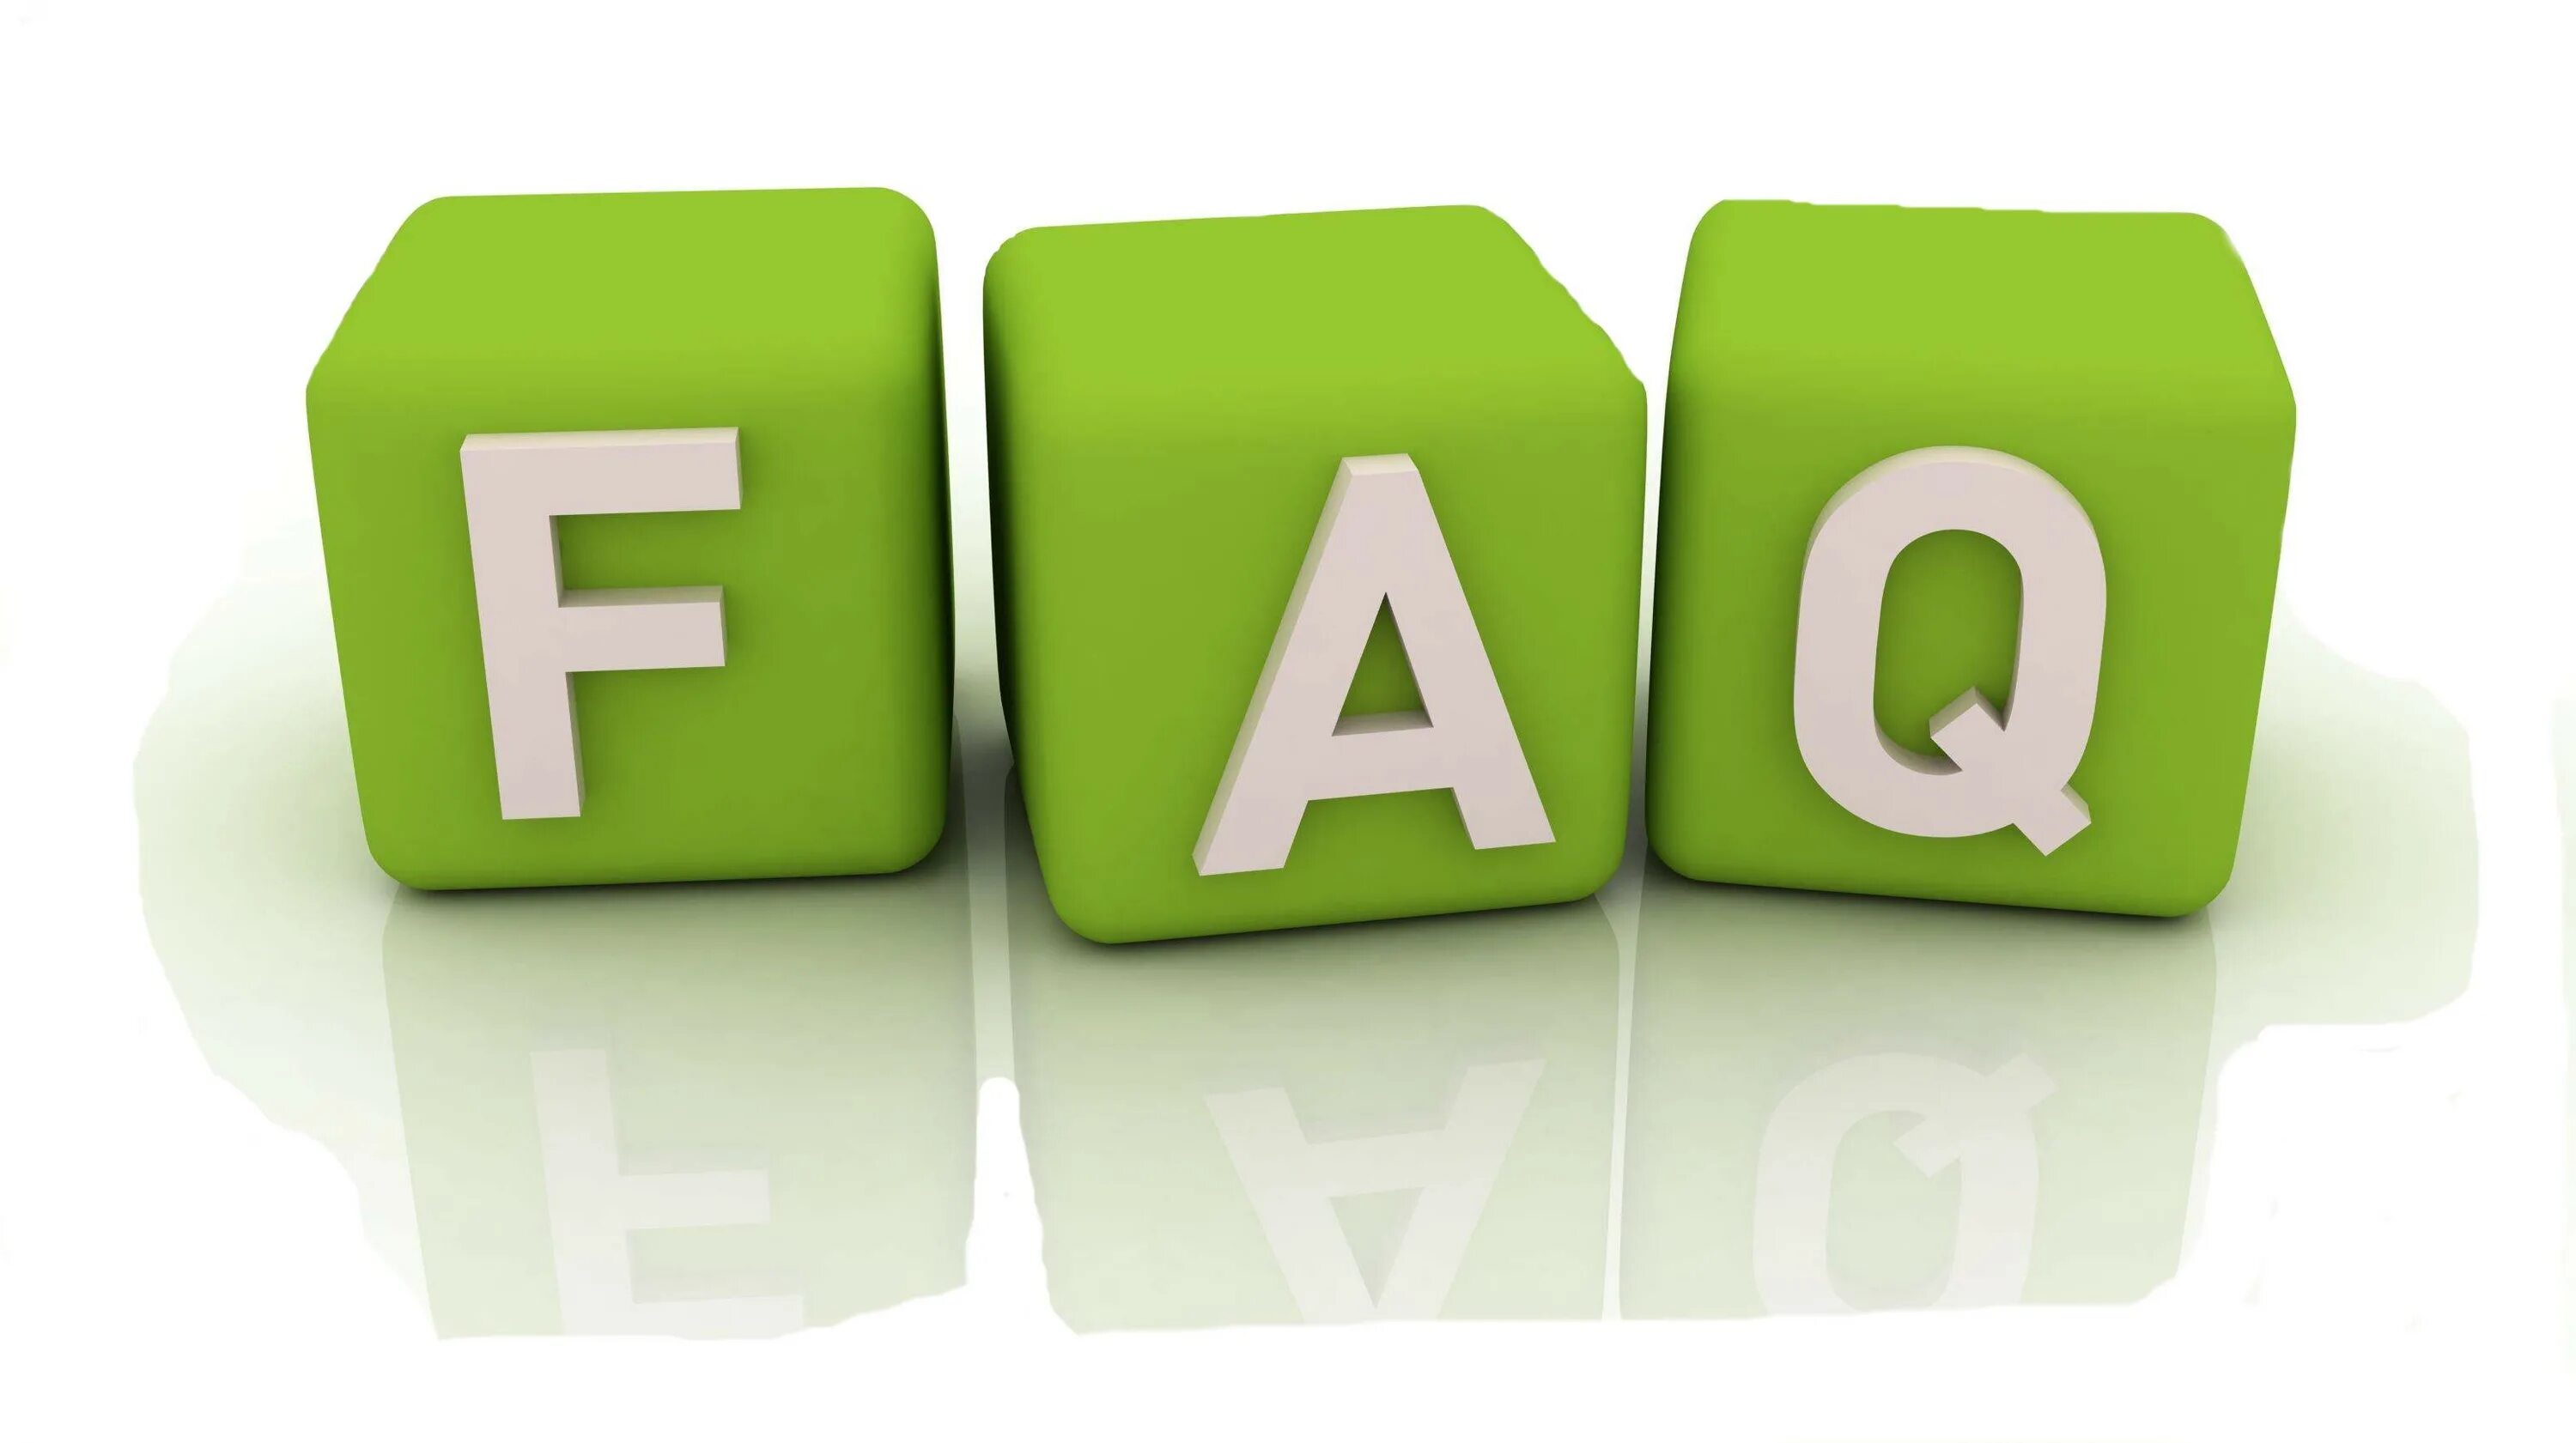 F a q 3. FAQ. FAQ картинка. FAQ на прозрачном фоне. FAQ без фона.